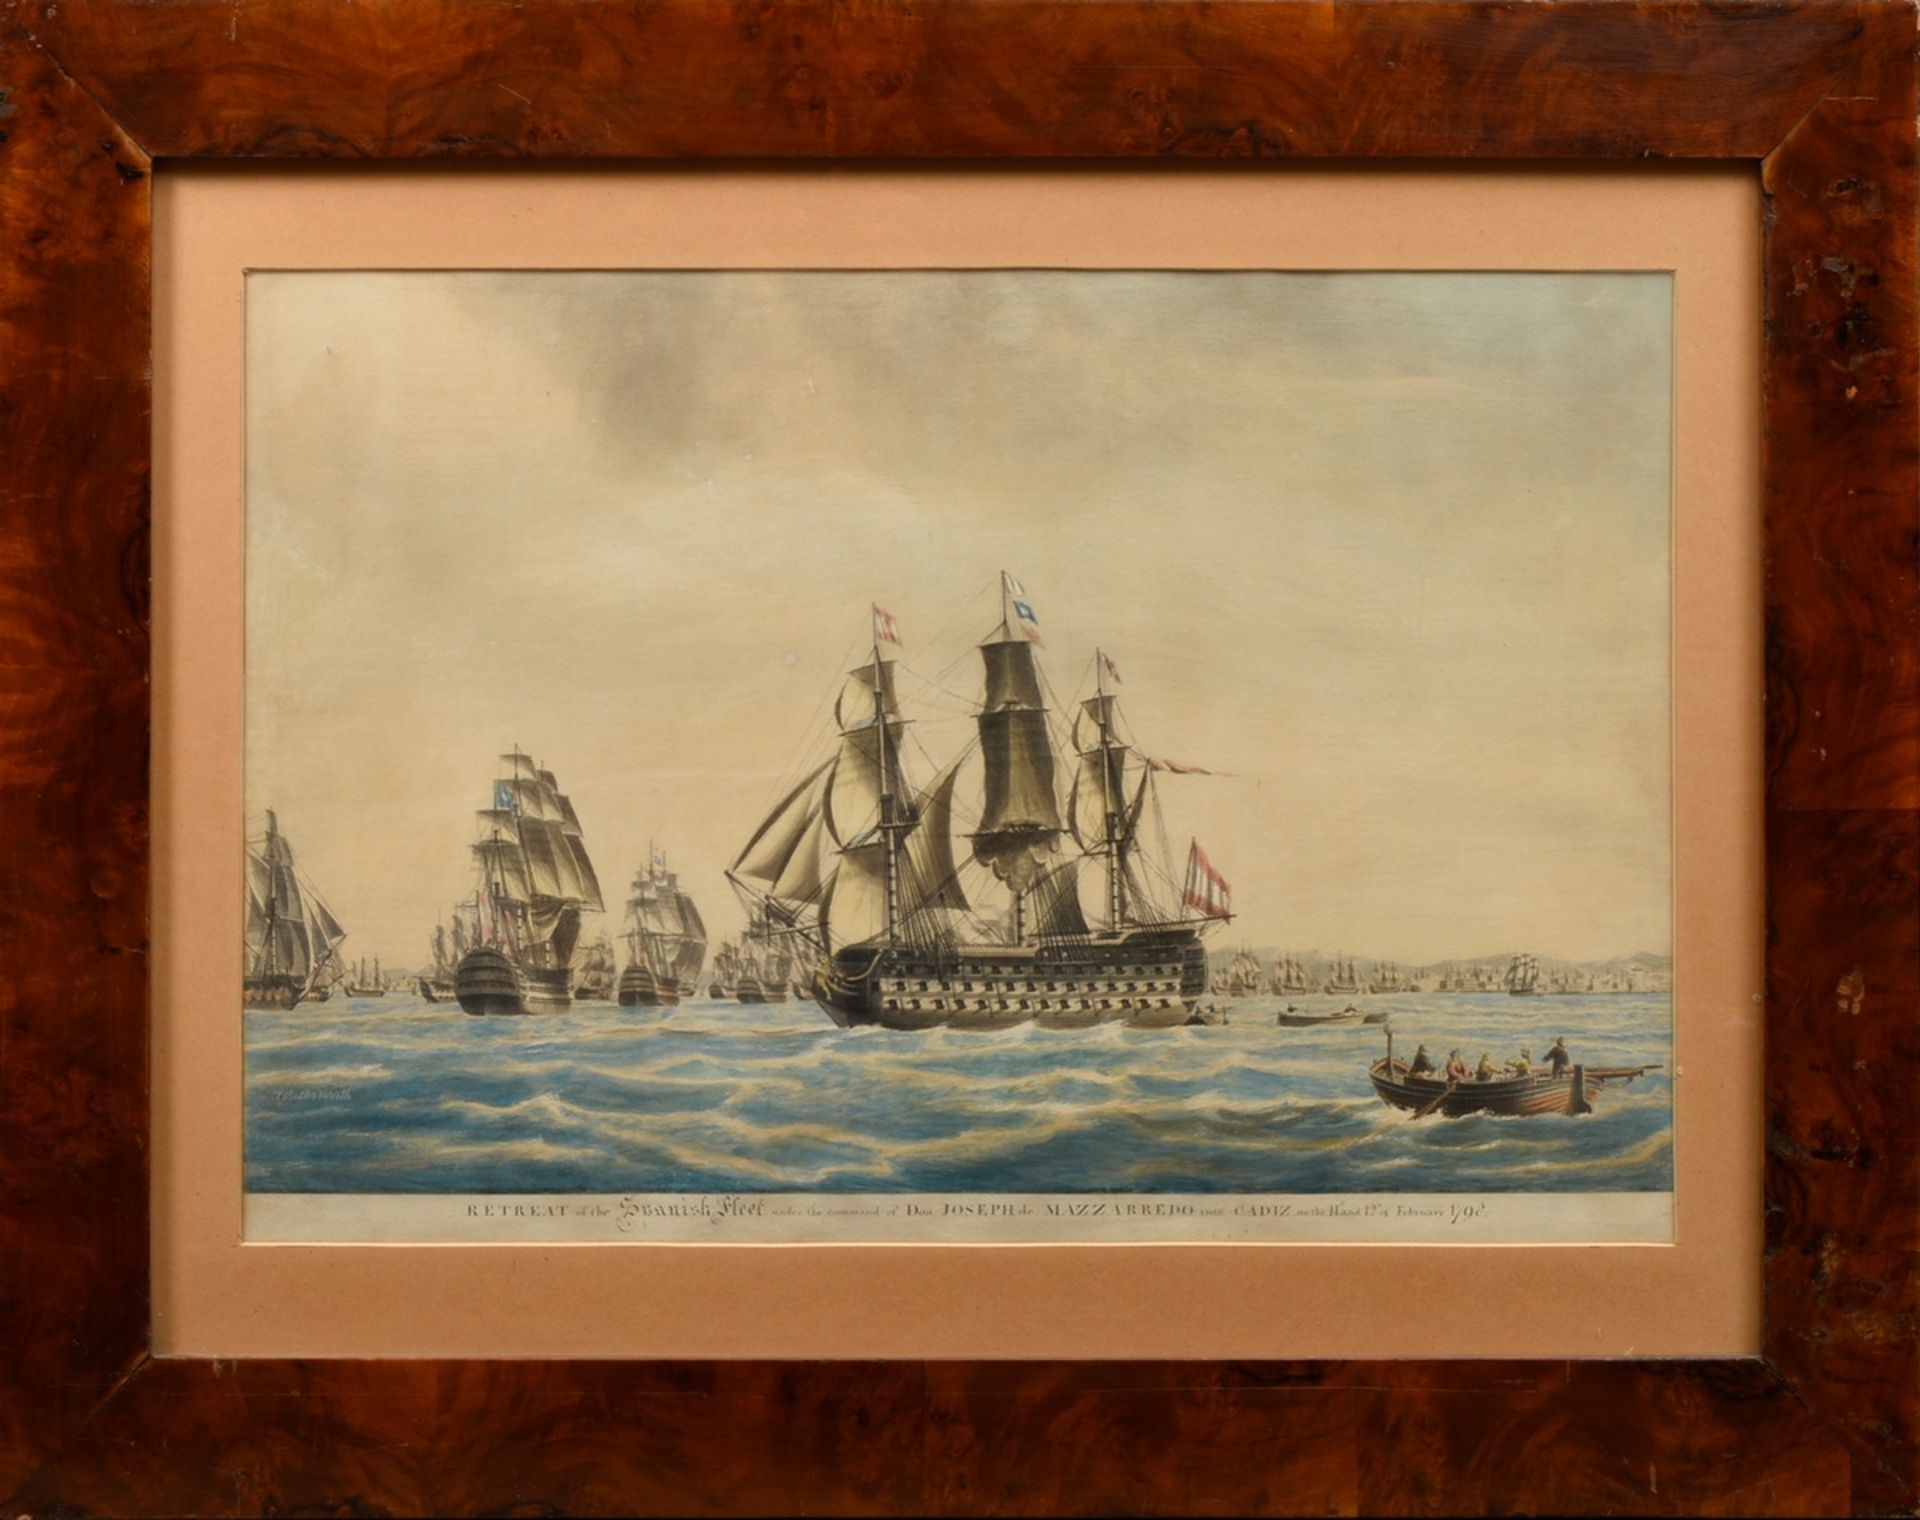 Buttersworth, Thomas (c.1768-1842) "Retreat of the Spanish Fleet under the command of Don Joseph de - Image 2 of 4